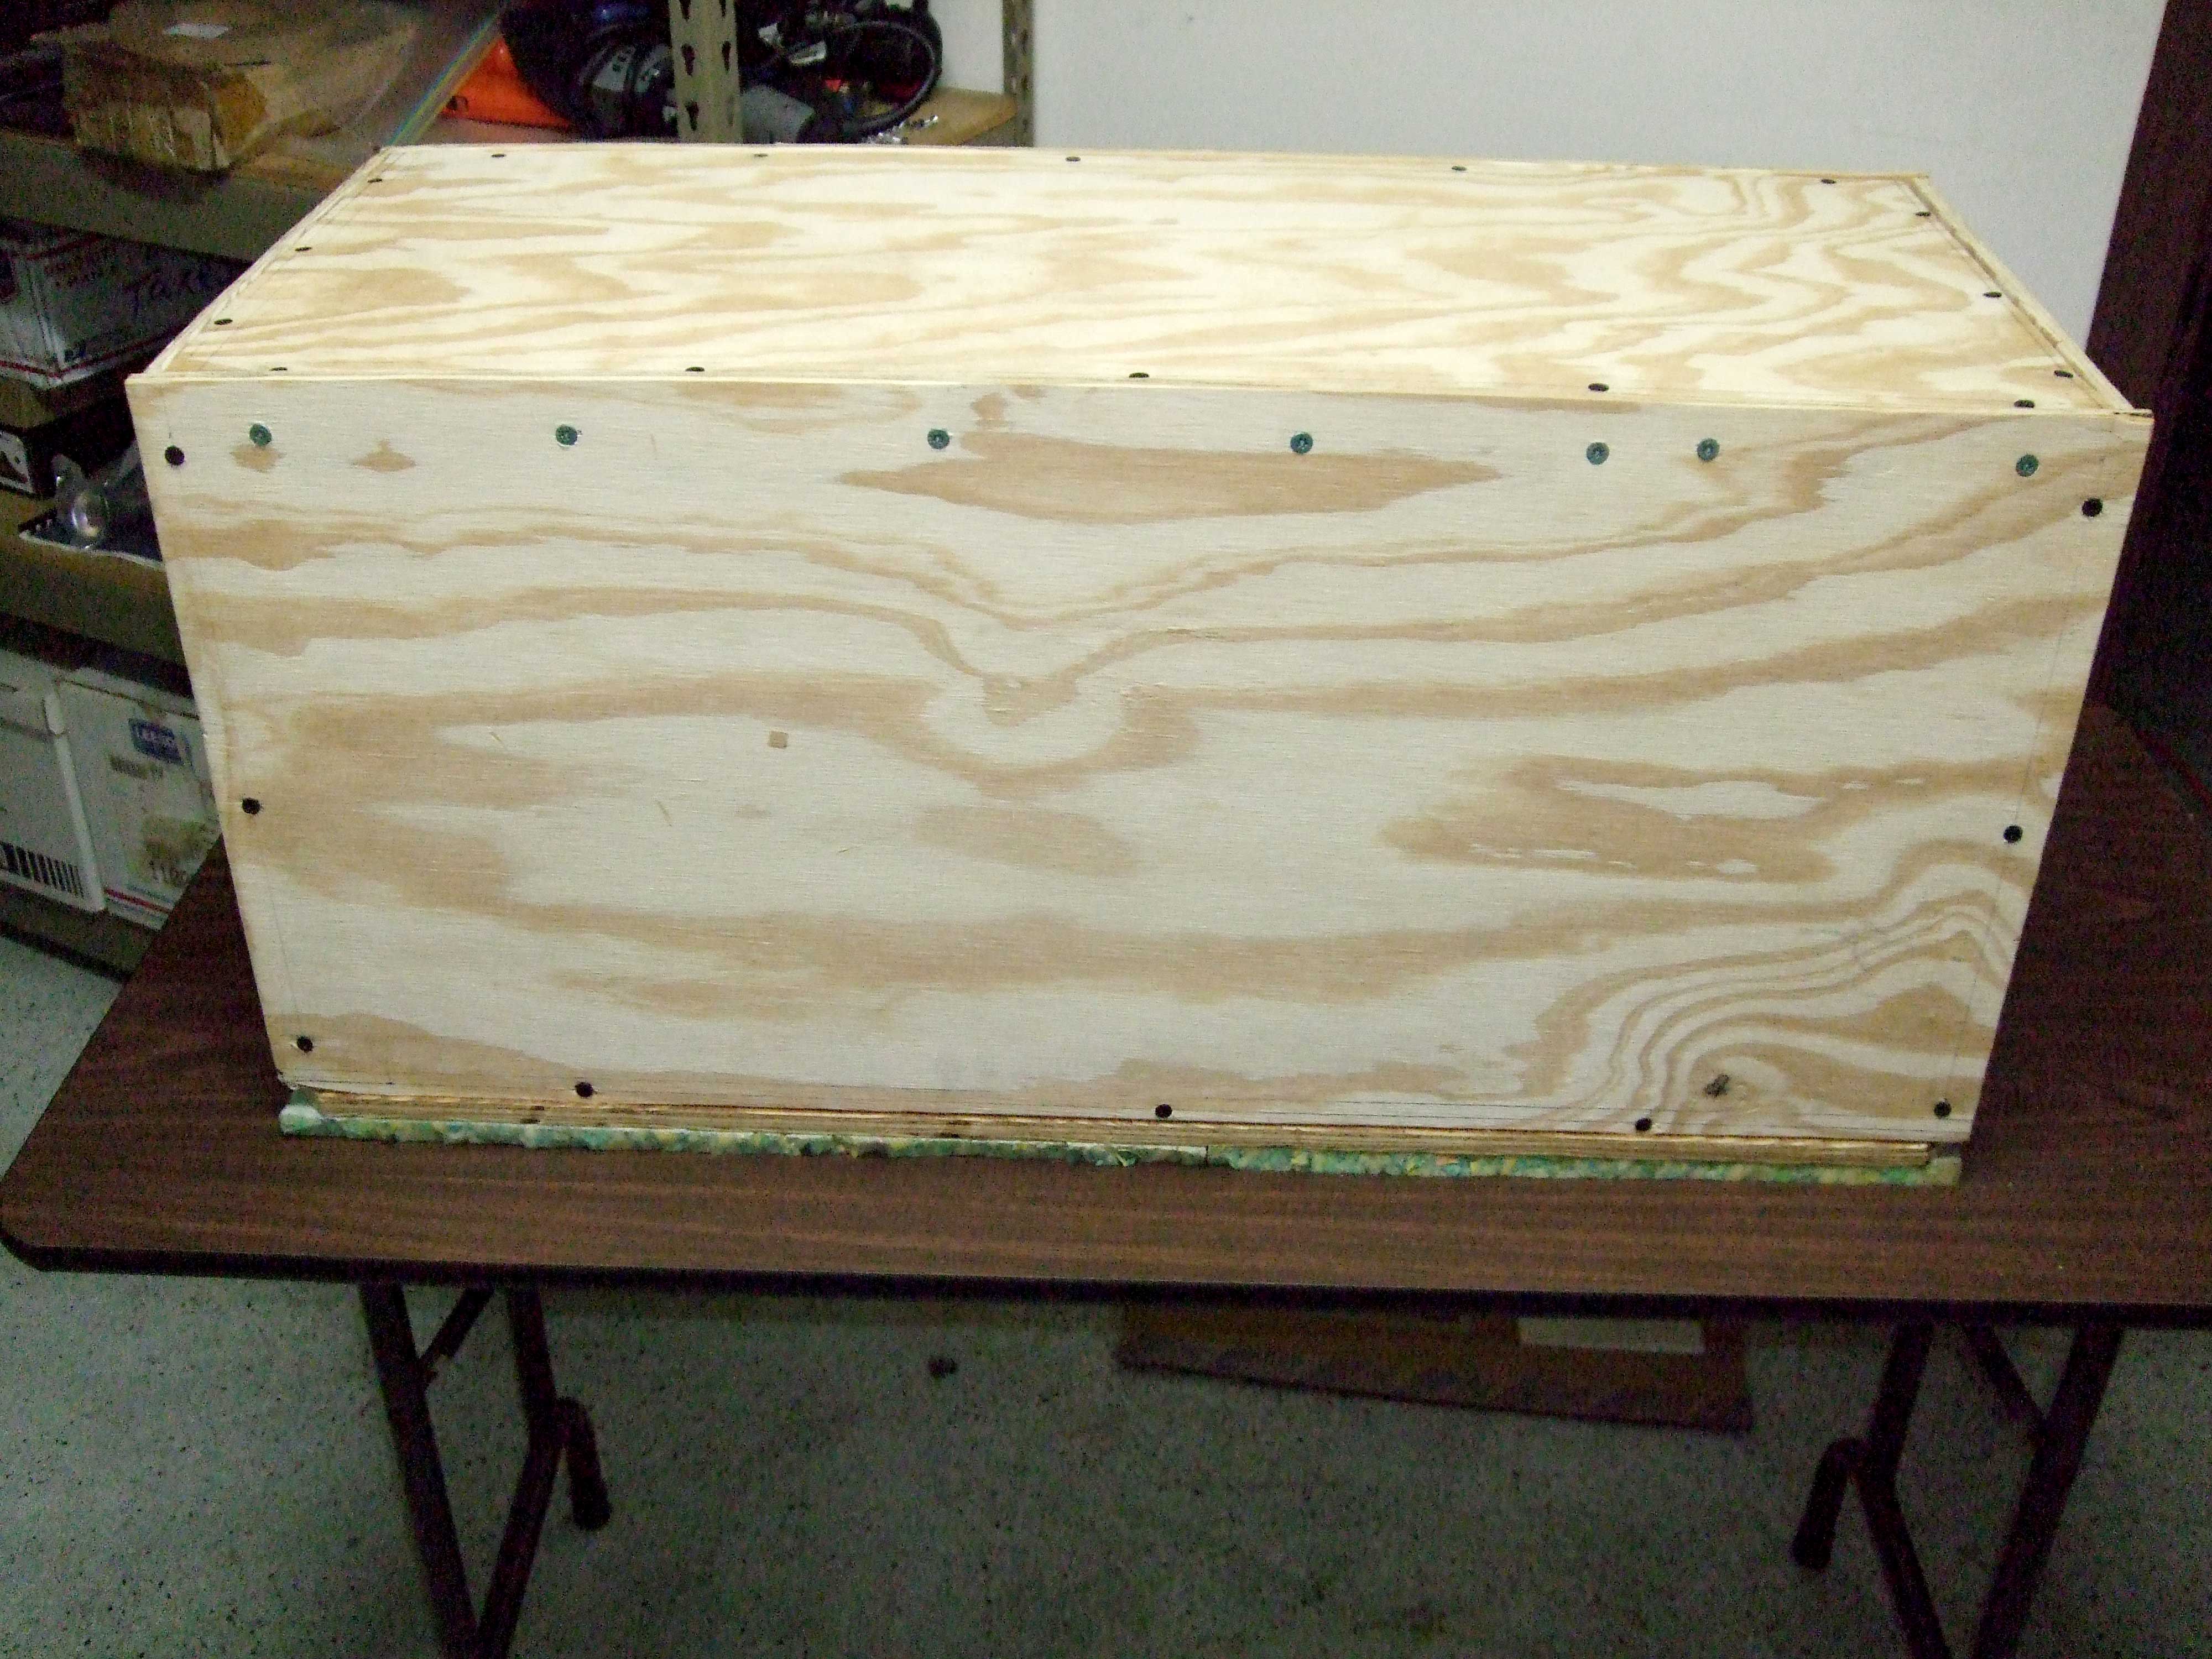 plywood-side-sealed.jpg